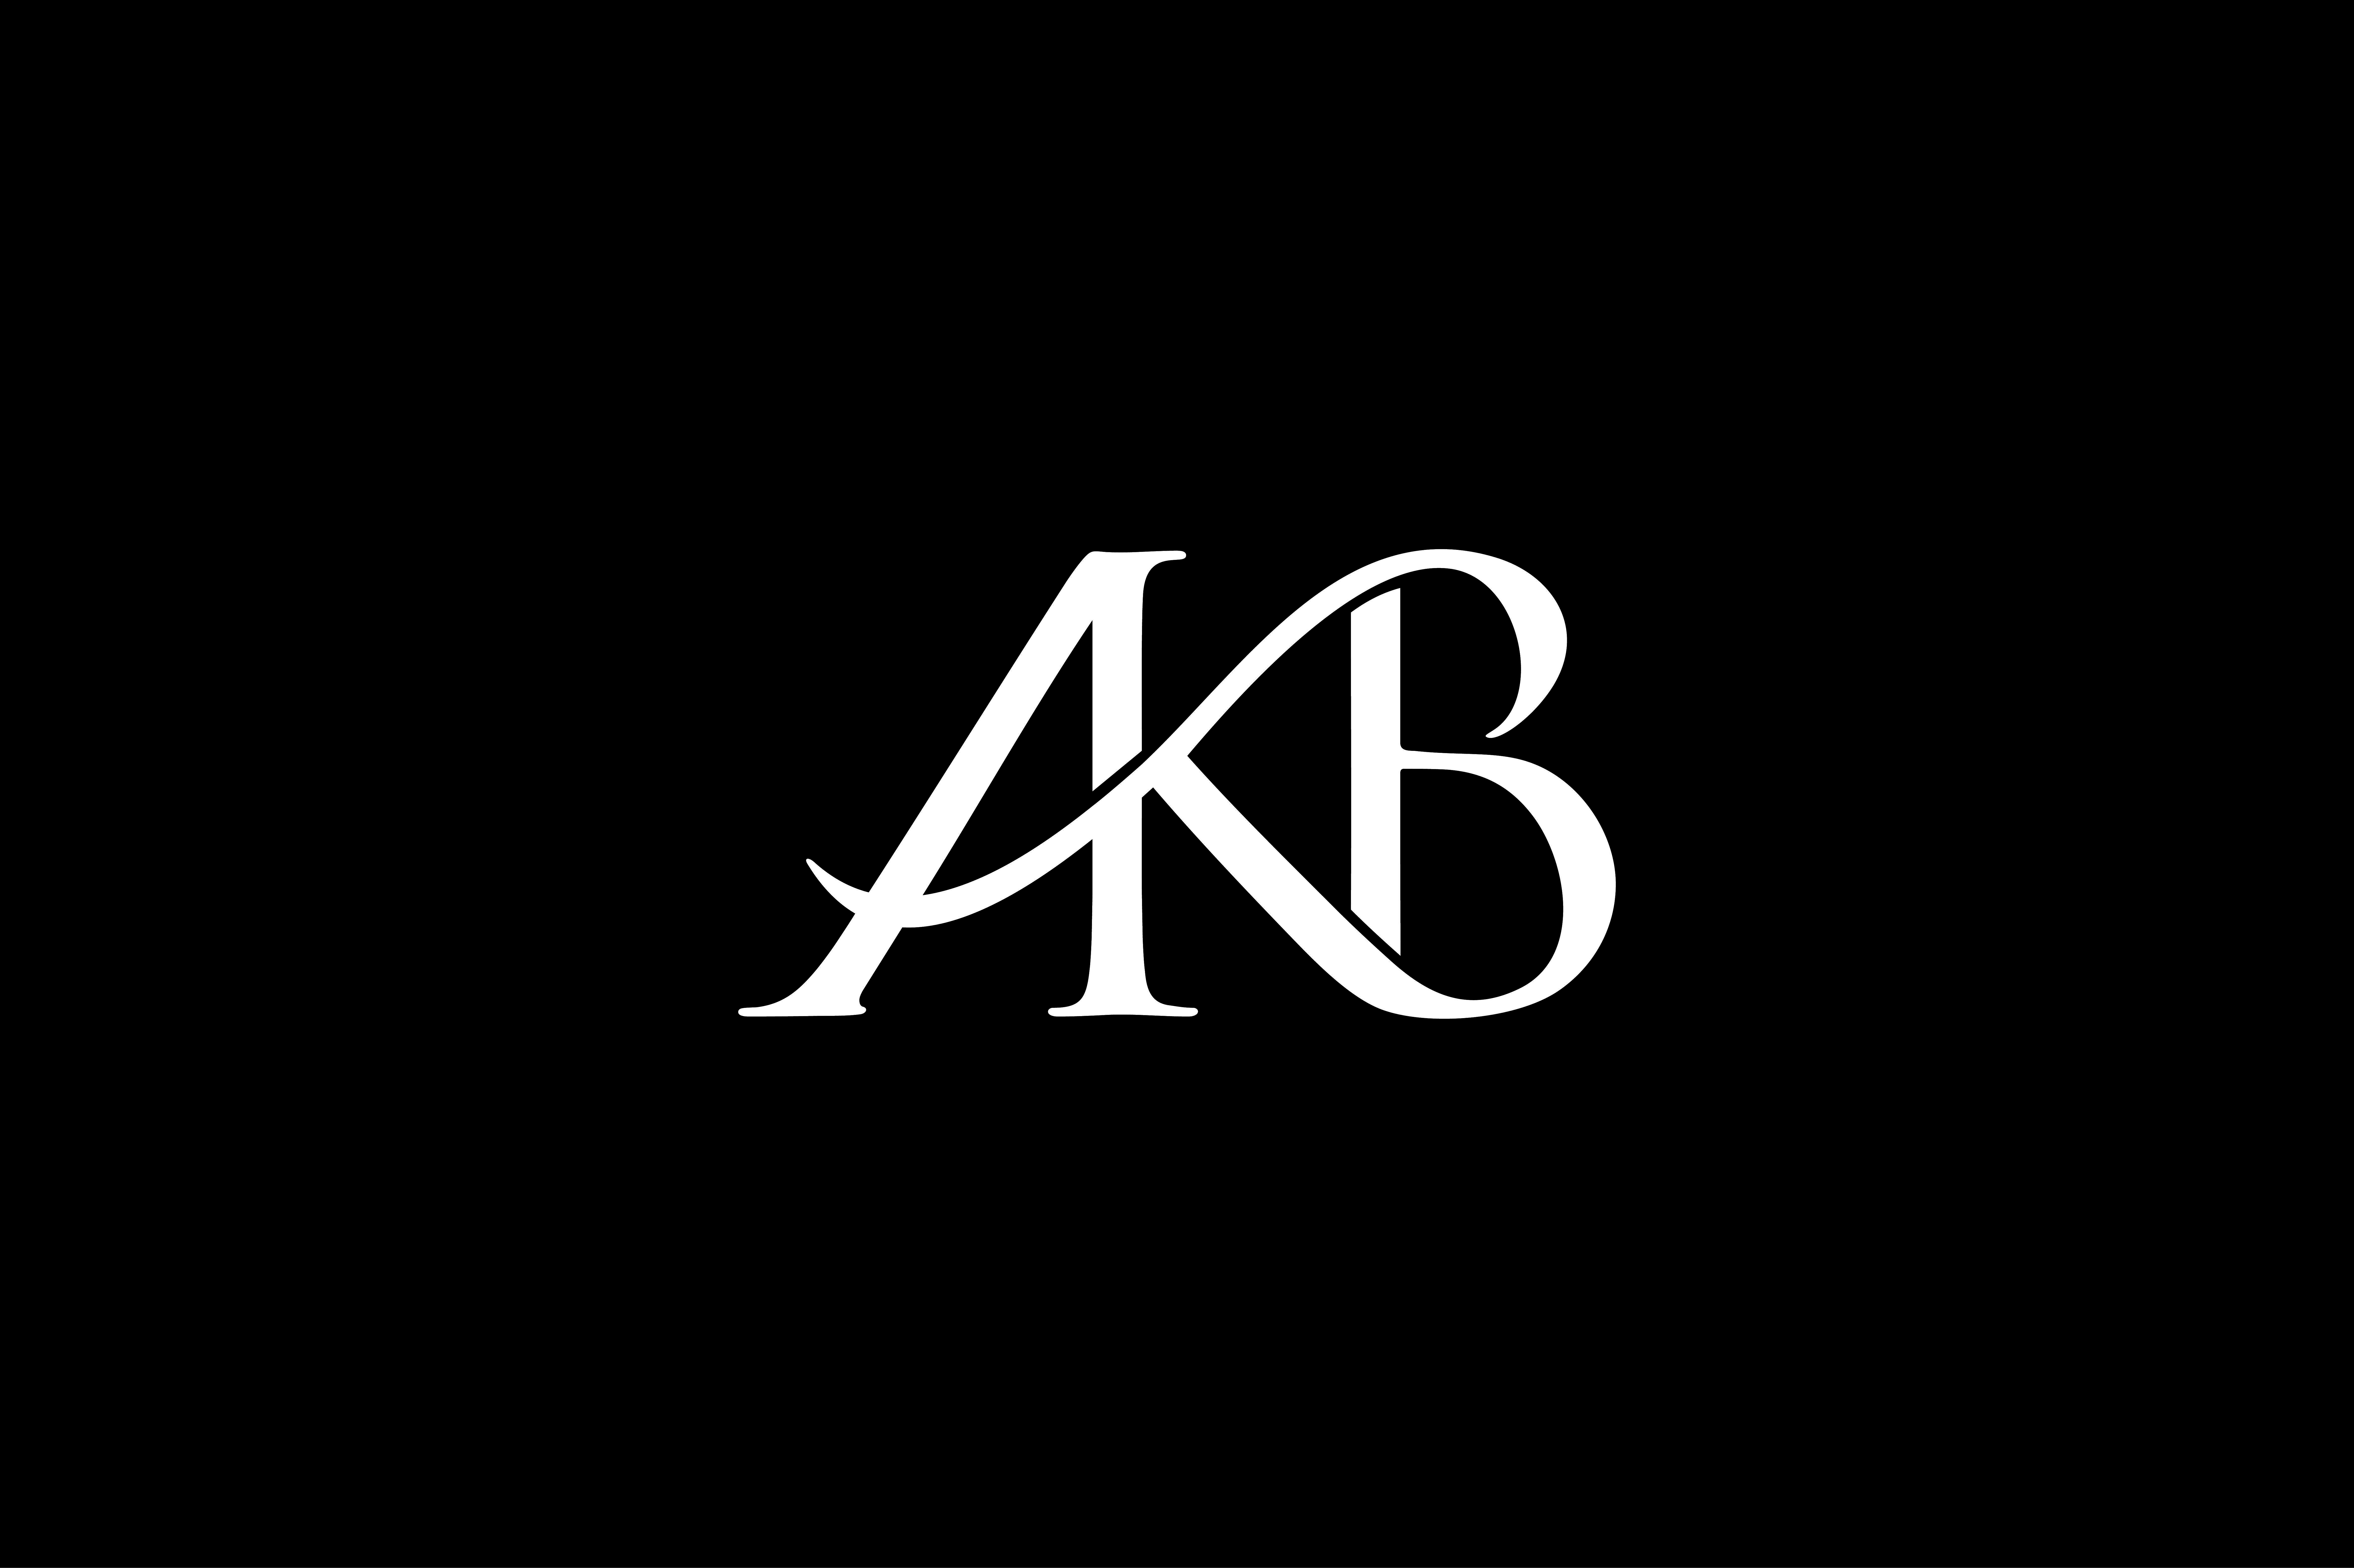 Green Lines Logo - Monogram AKB Logo Design Graphic by Greenlines Studios - Creative ...